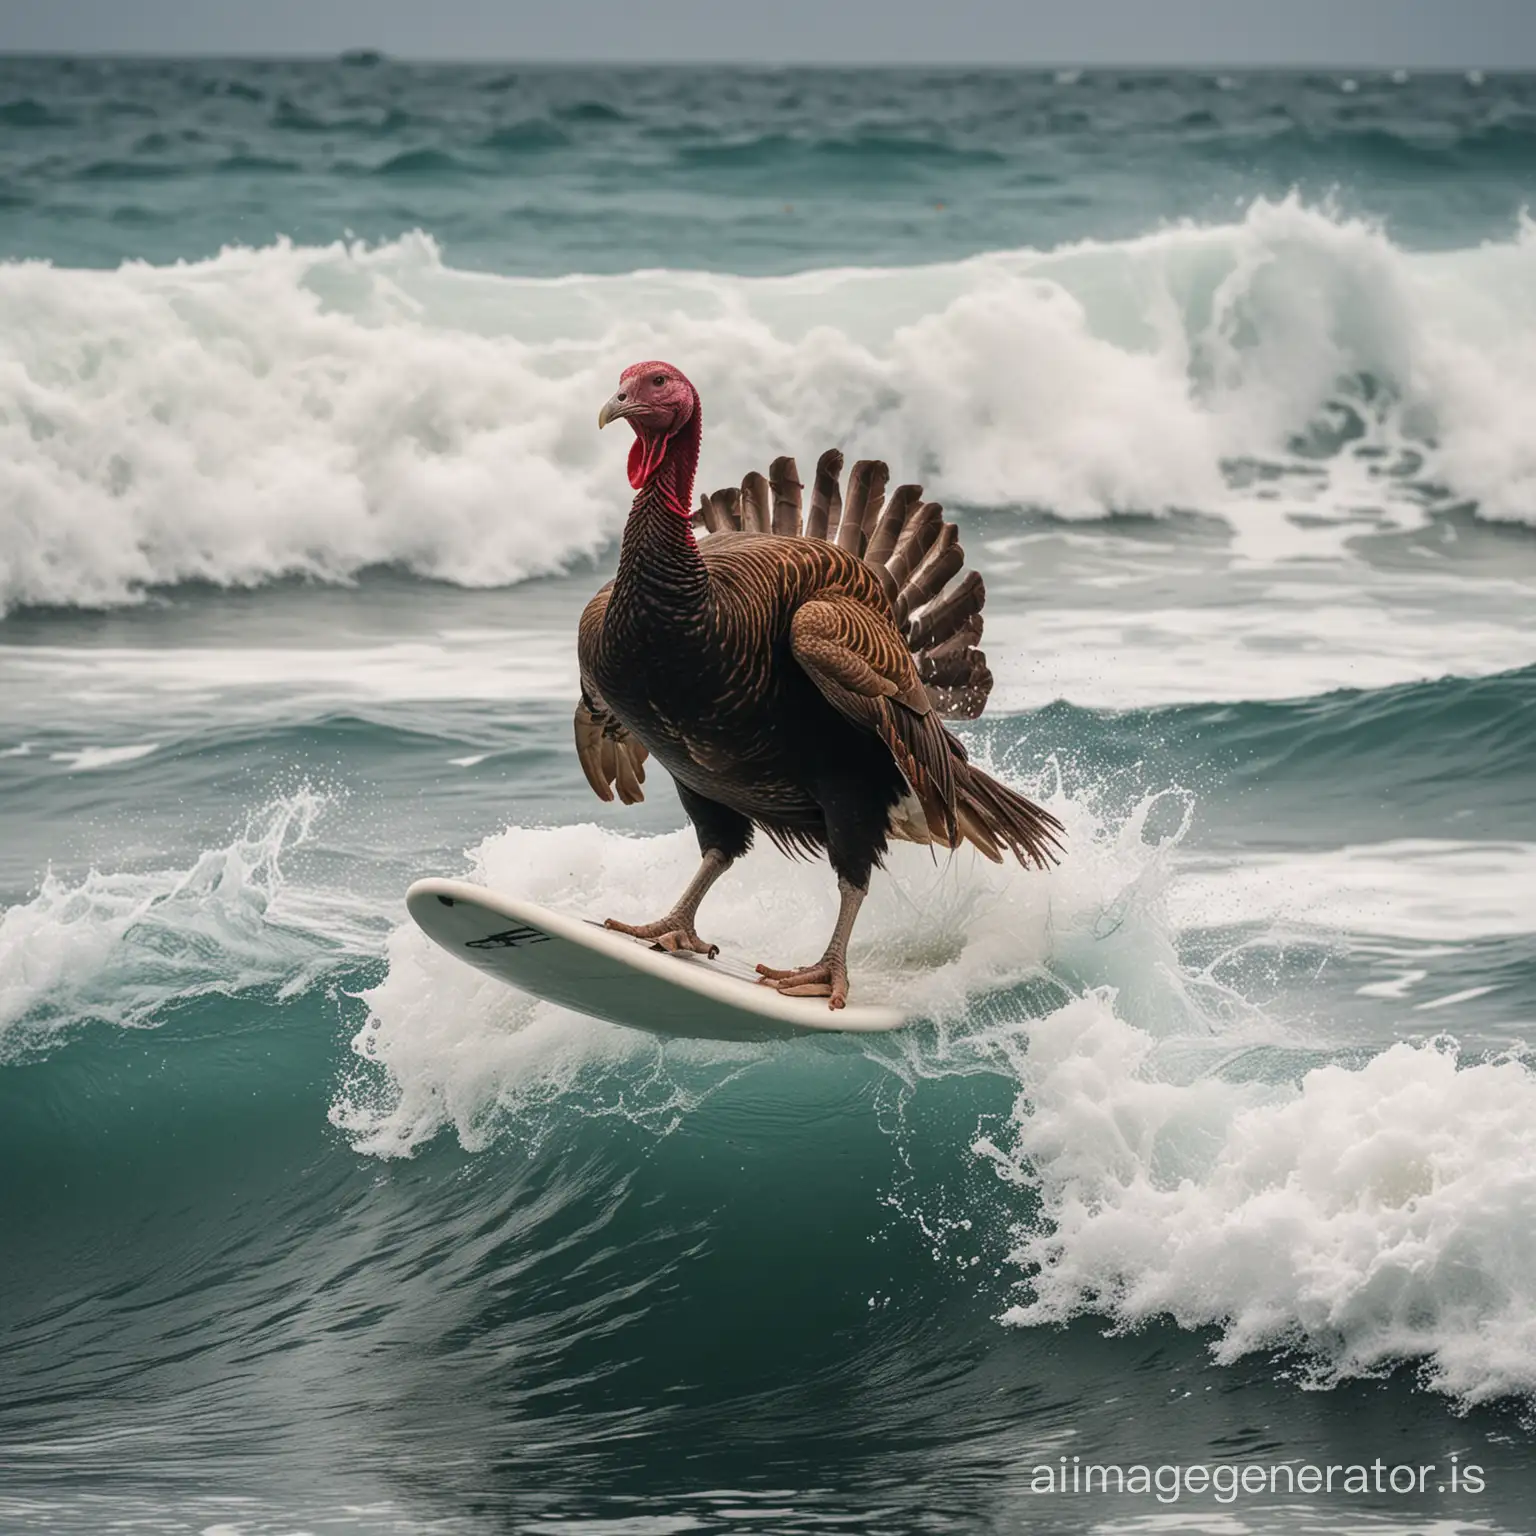 Turkey-Surfing-Avian-Adventure-in-Ocean-Waves